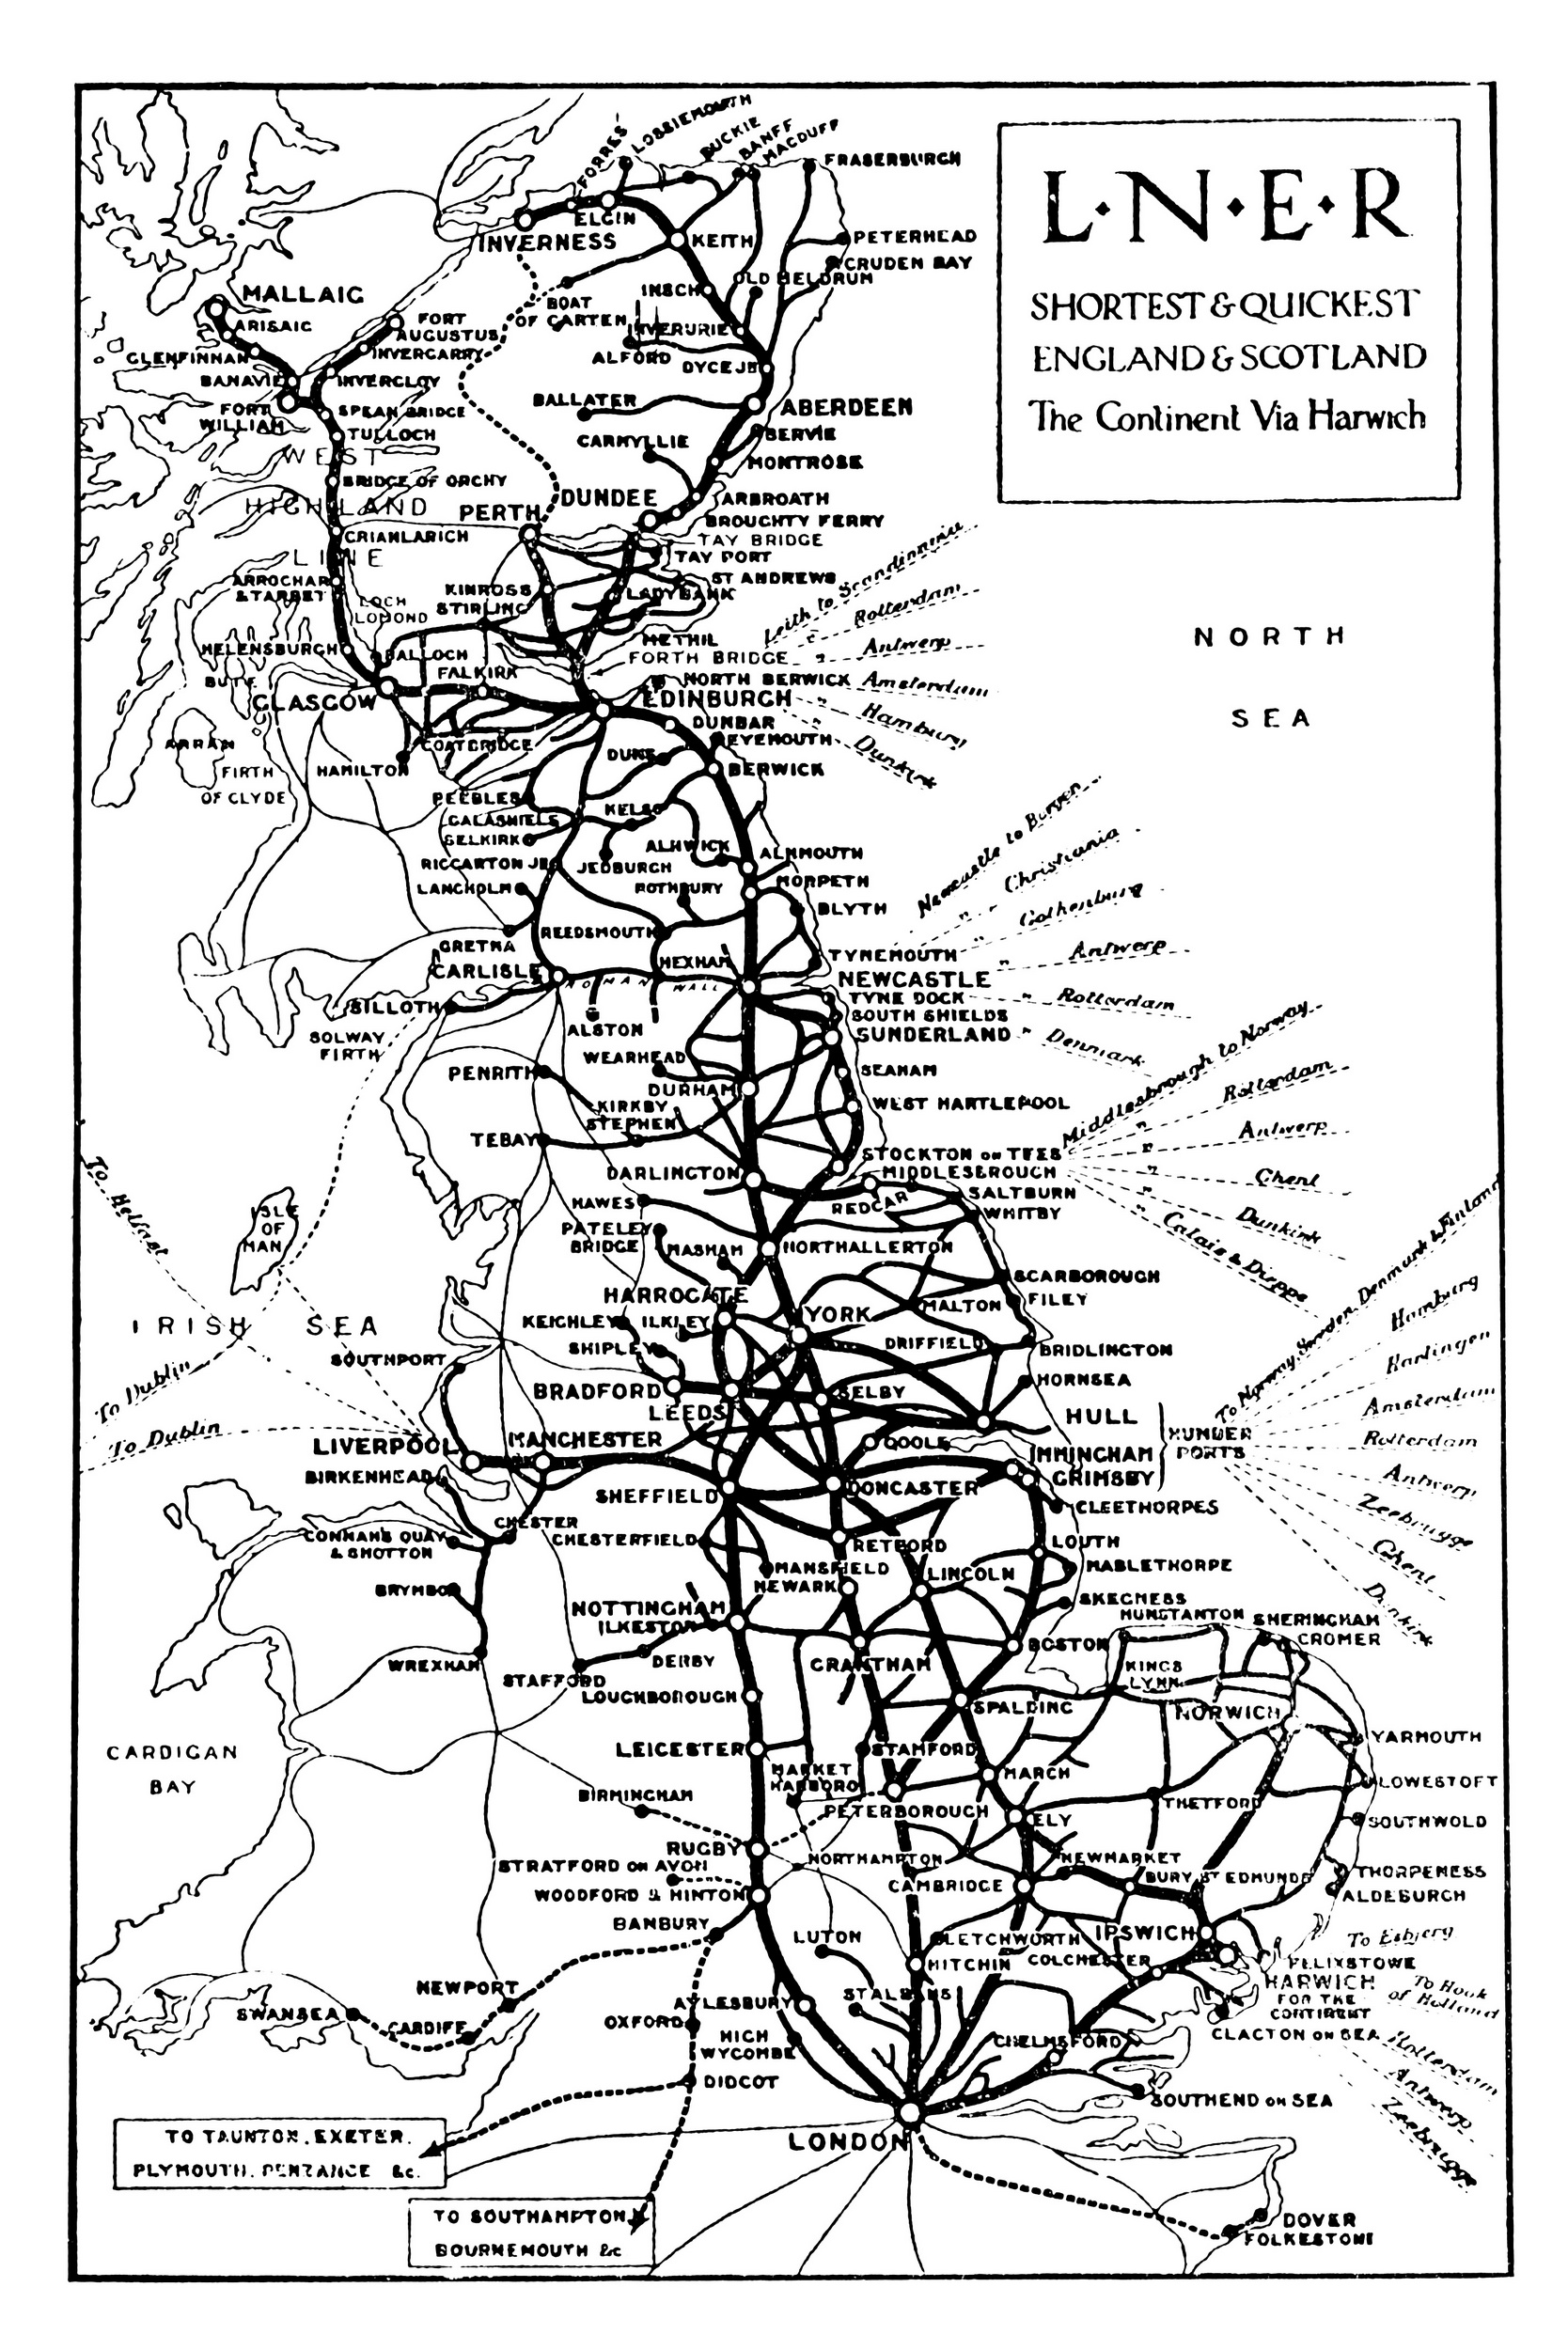 Transportation Company - London and North Eastern - Railroad